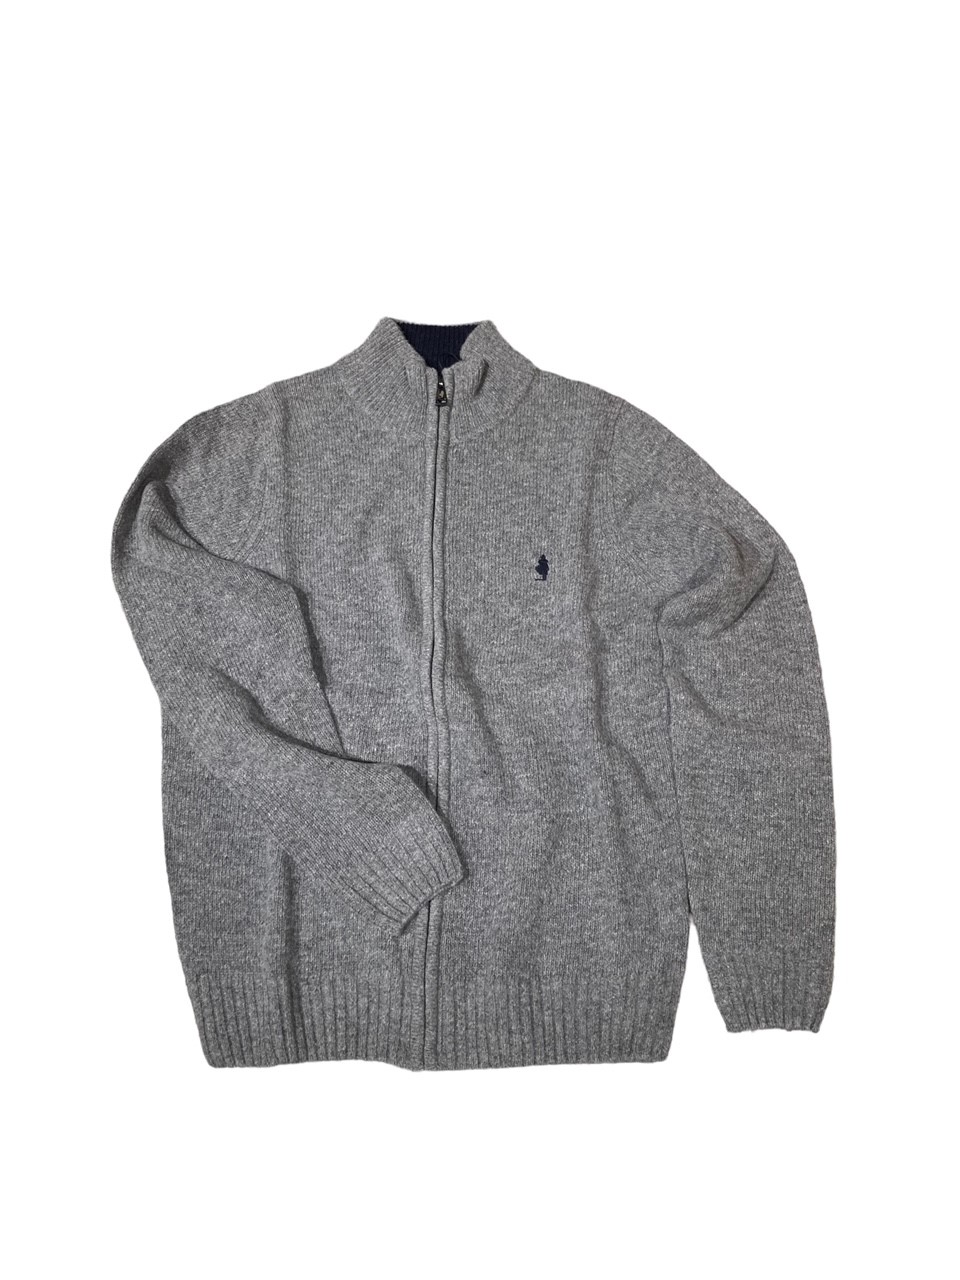 Lambswool full zip sweater